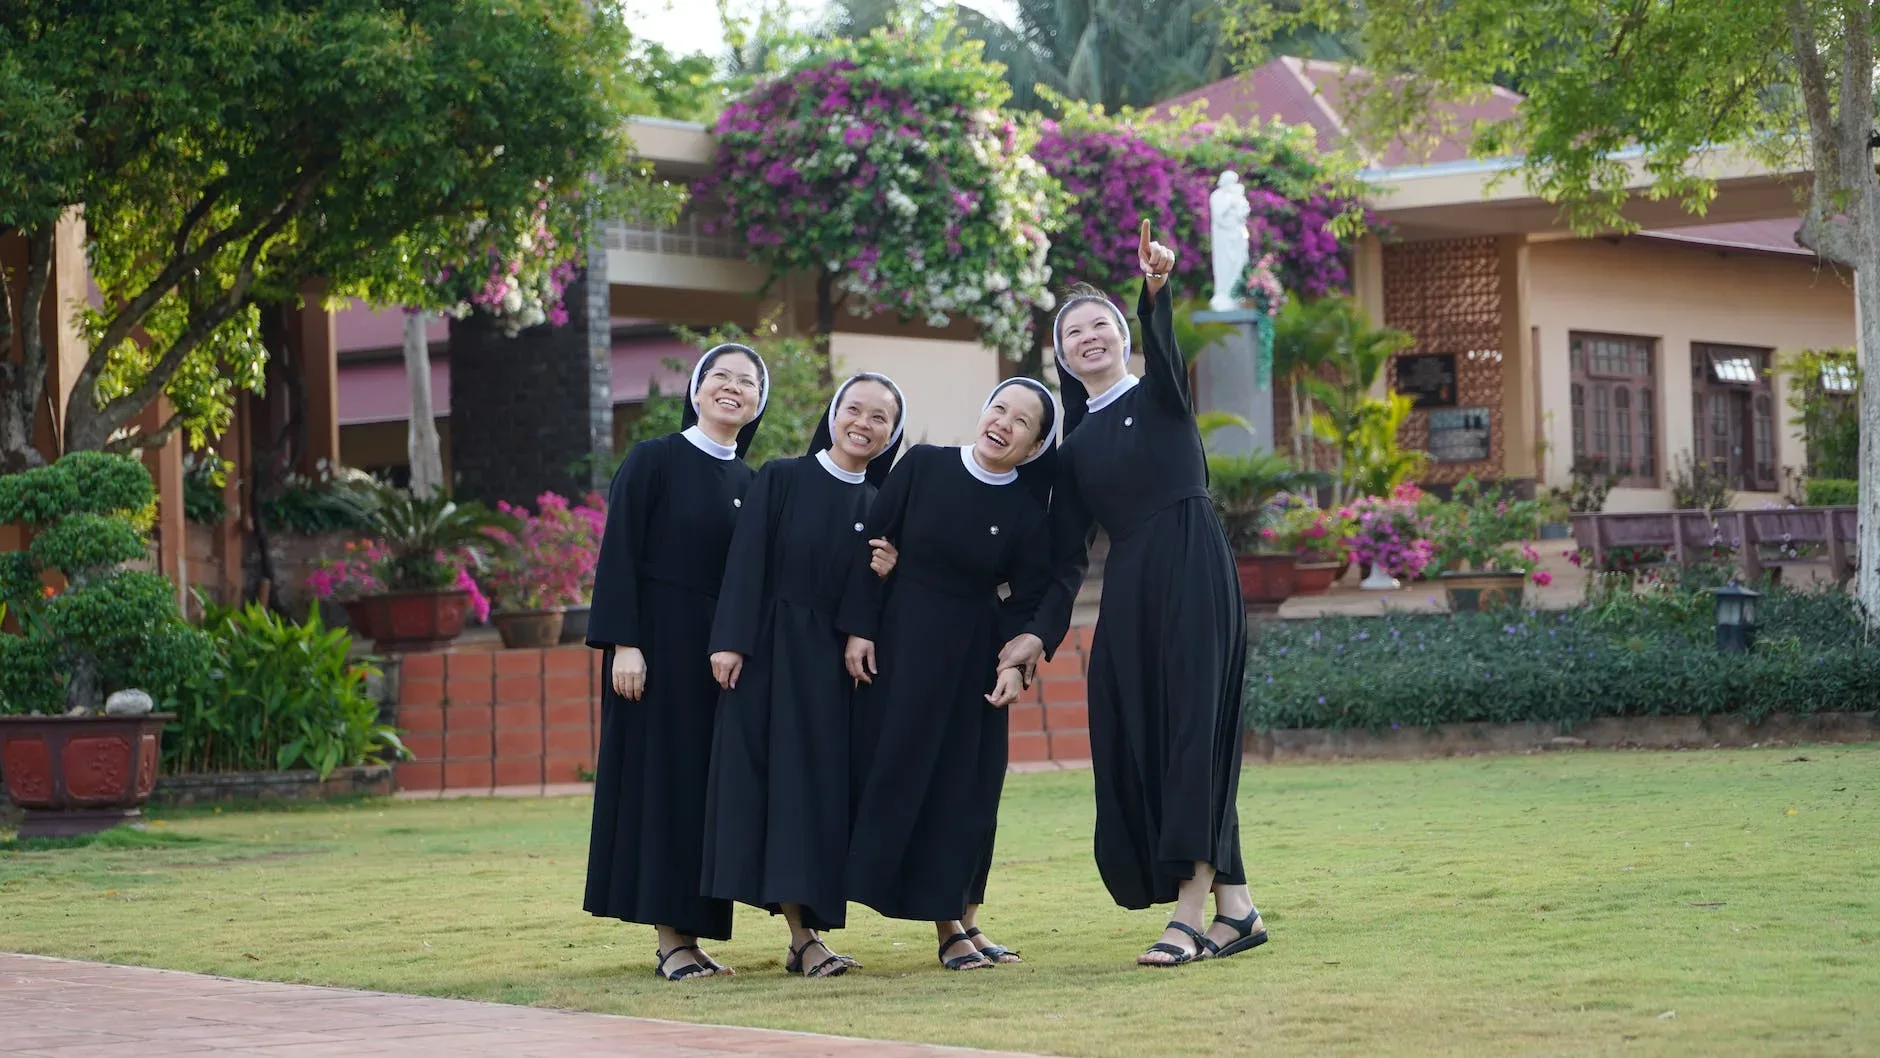 cheerful smiling nuns